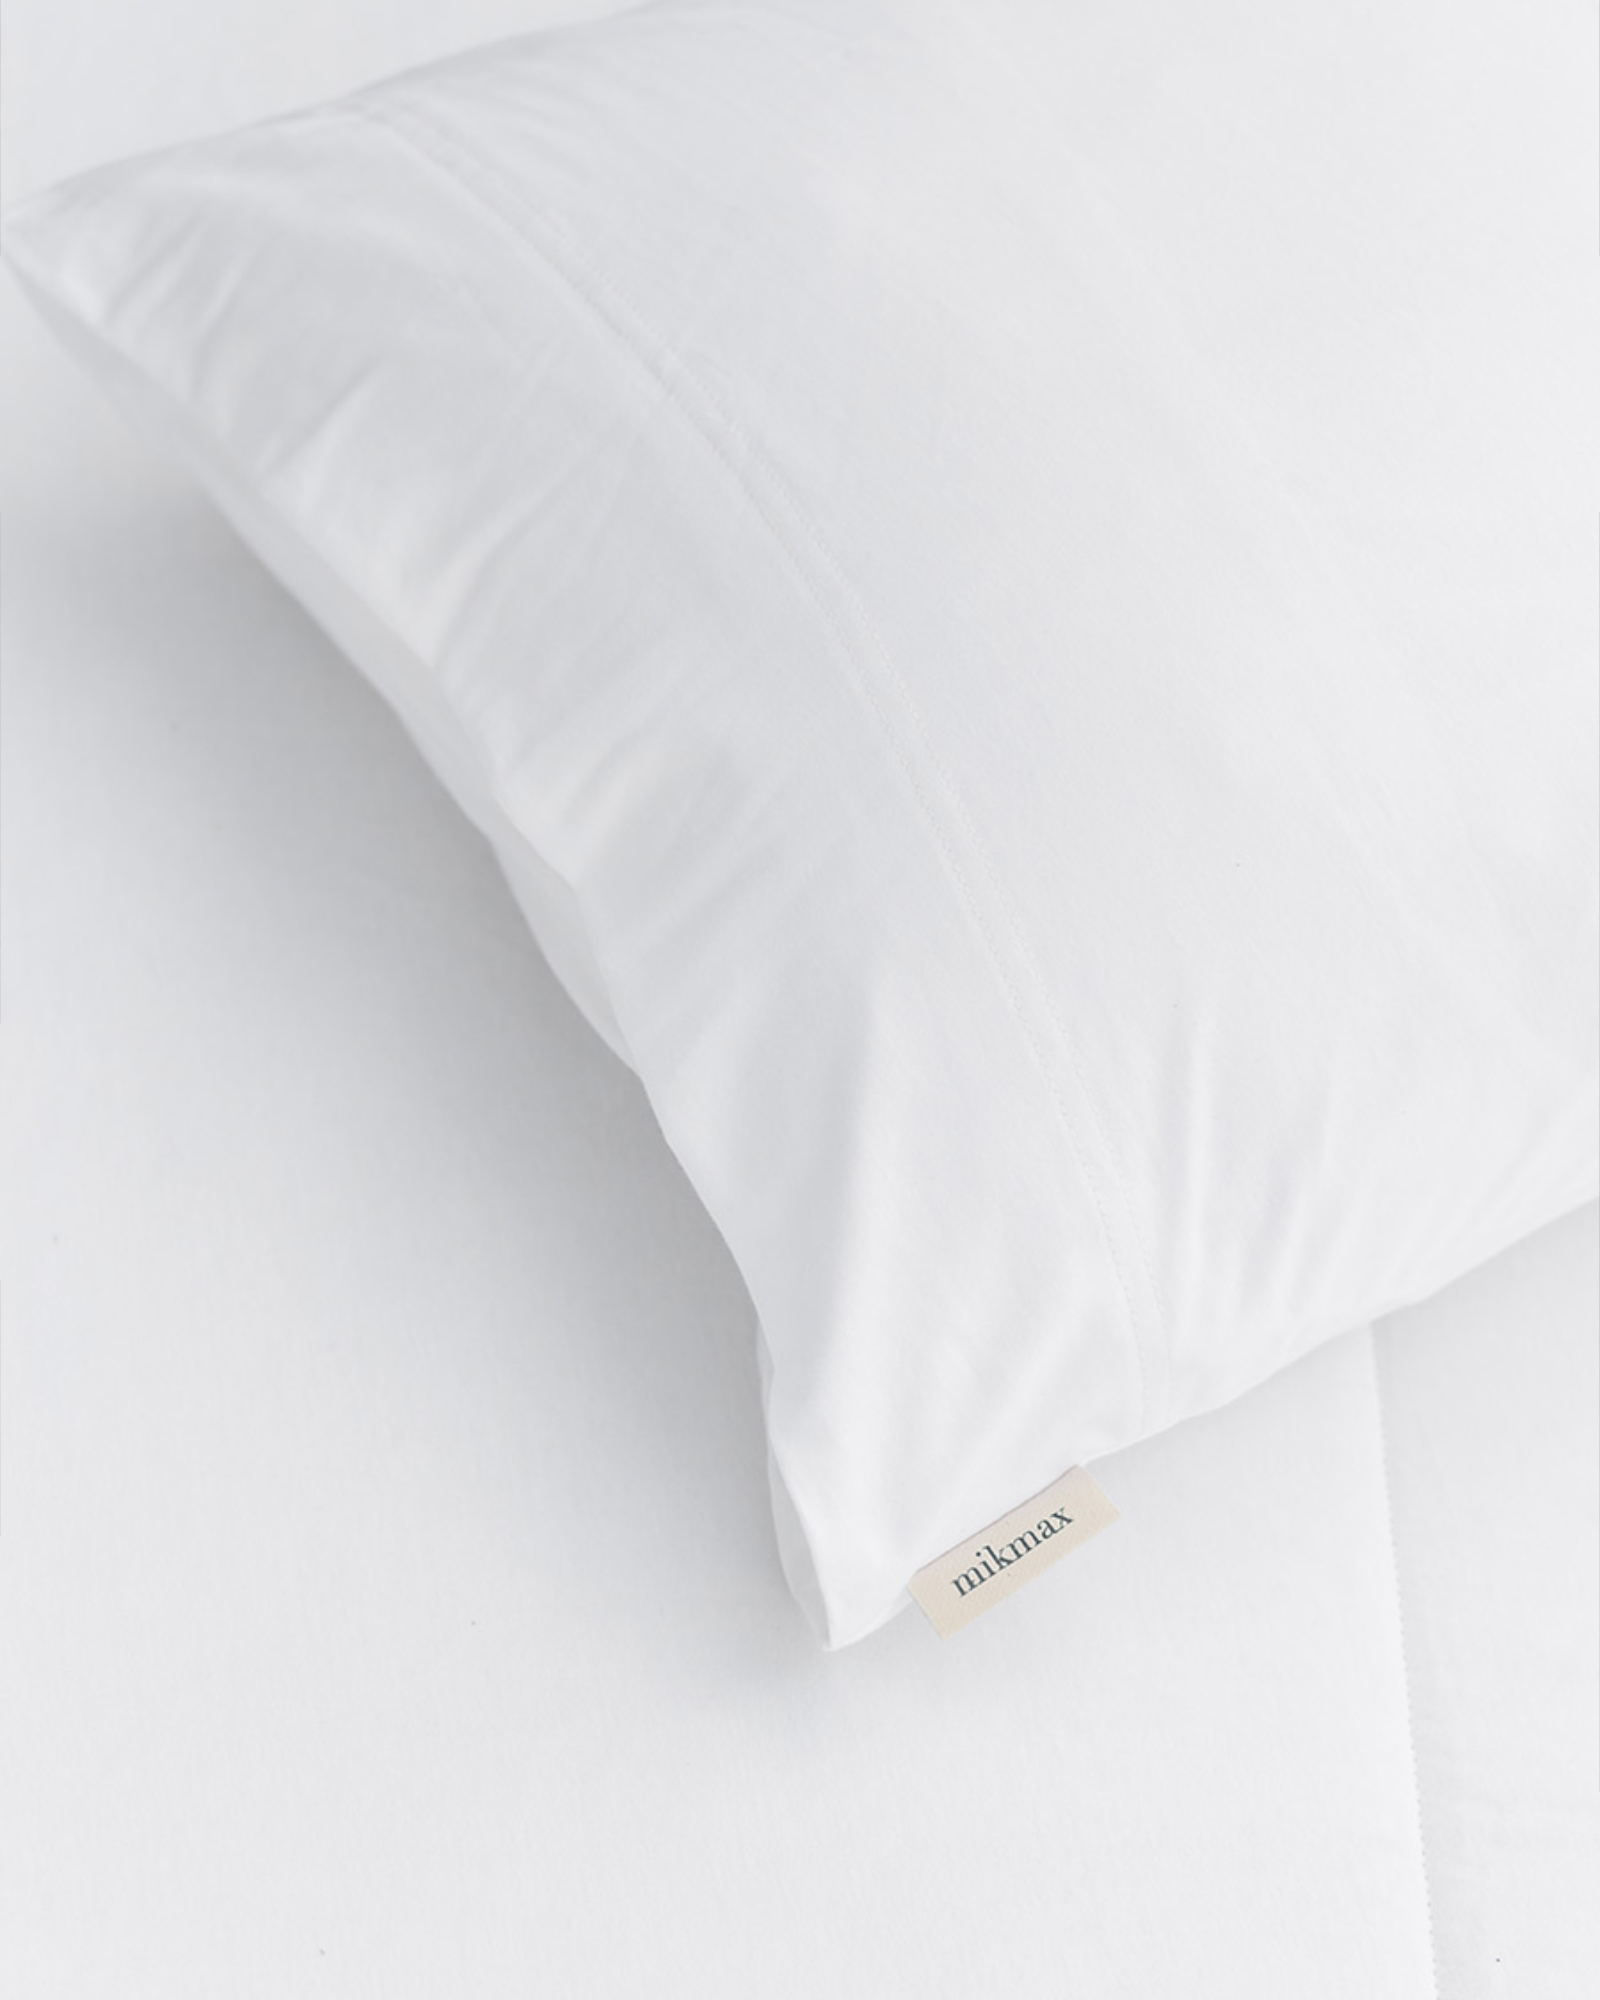 Mikmax - Pillowcase WHITE PLAIN - 65x65 cm - White